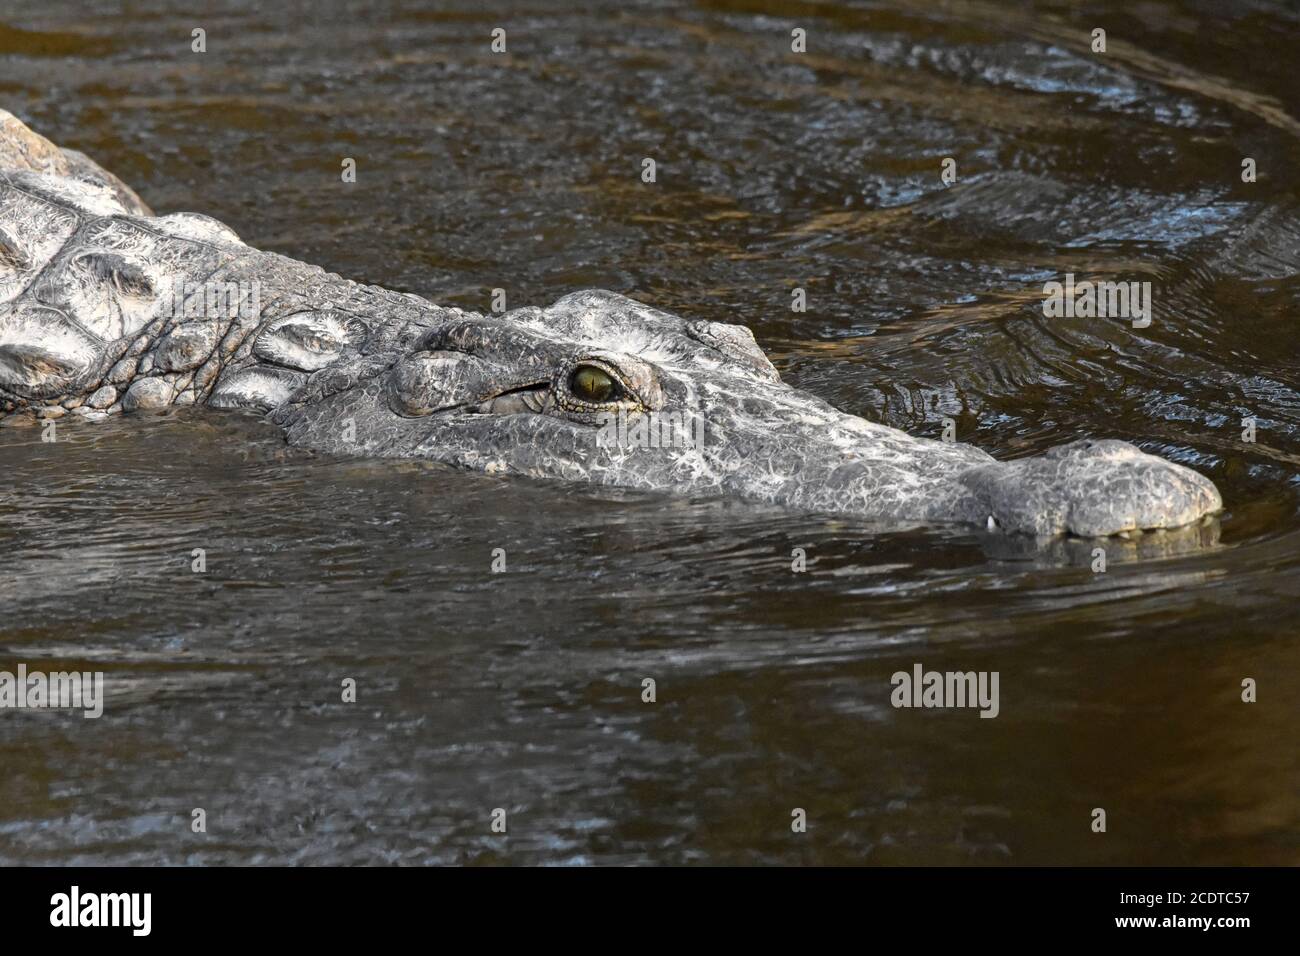 Crocodile head  entering water - closeup Stock Photo